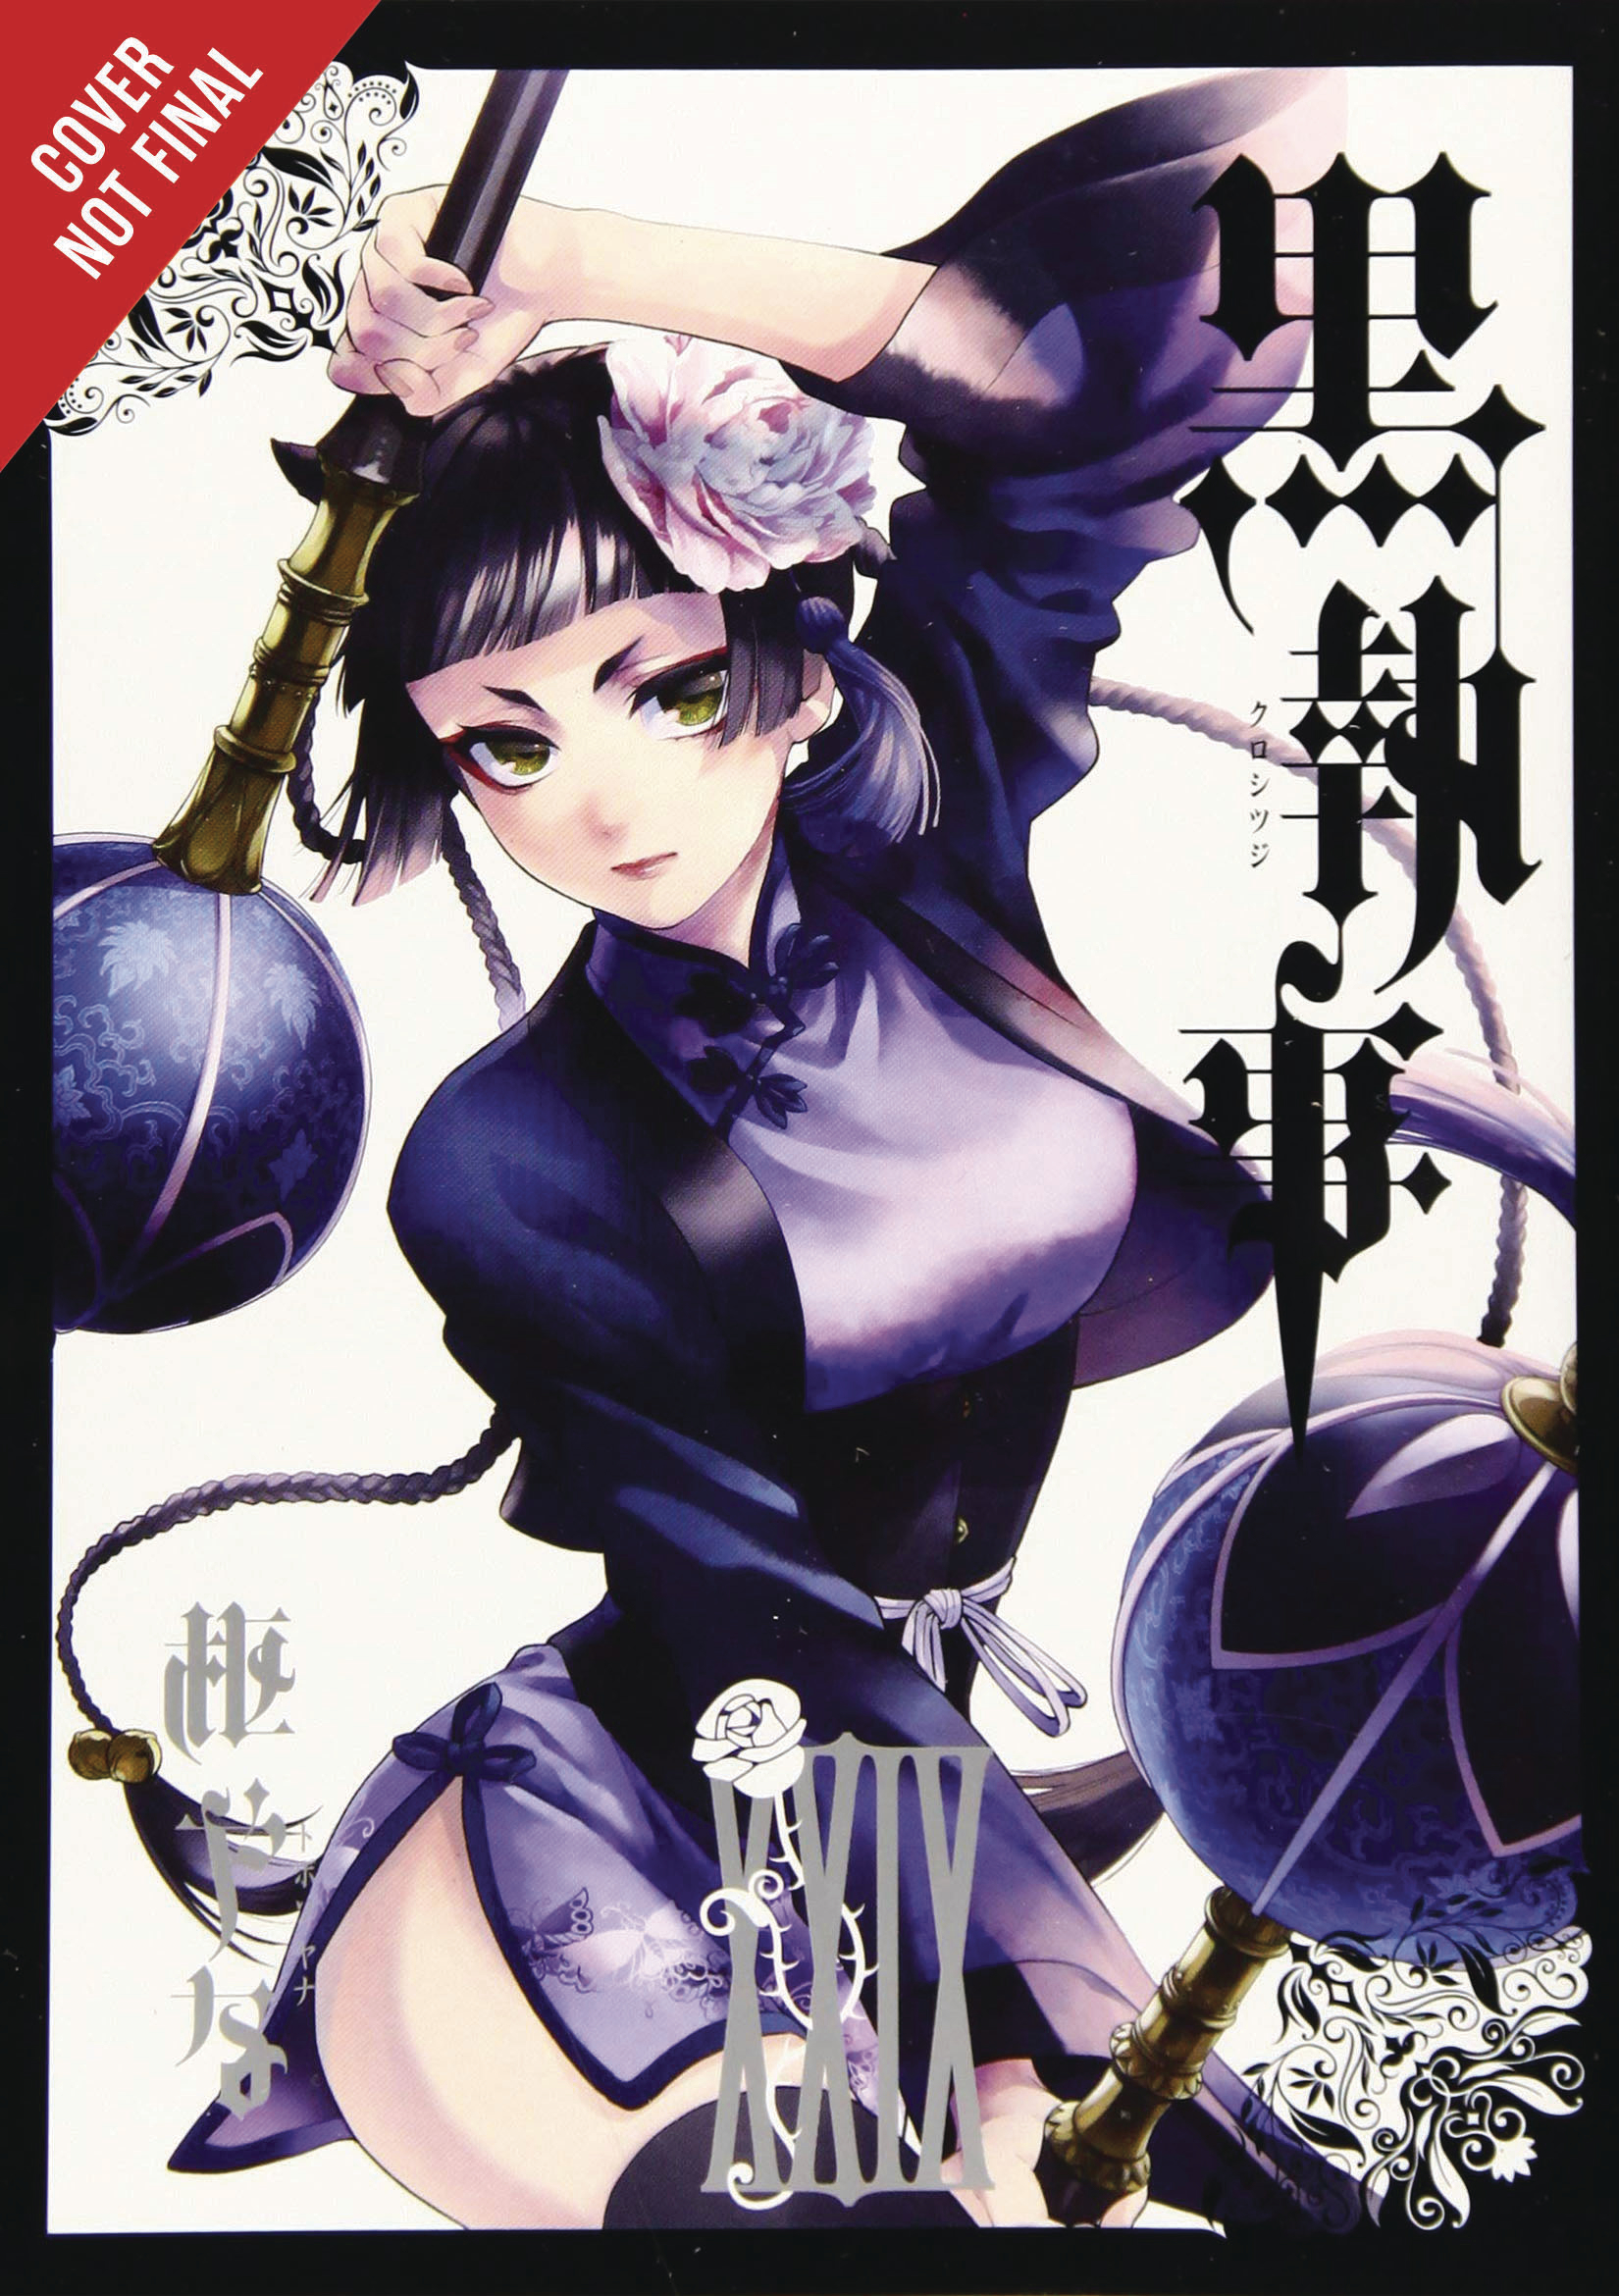 Black Butler Manga Volume 29